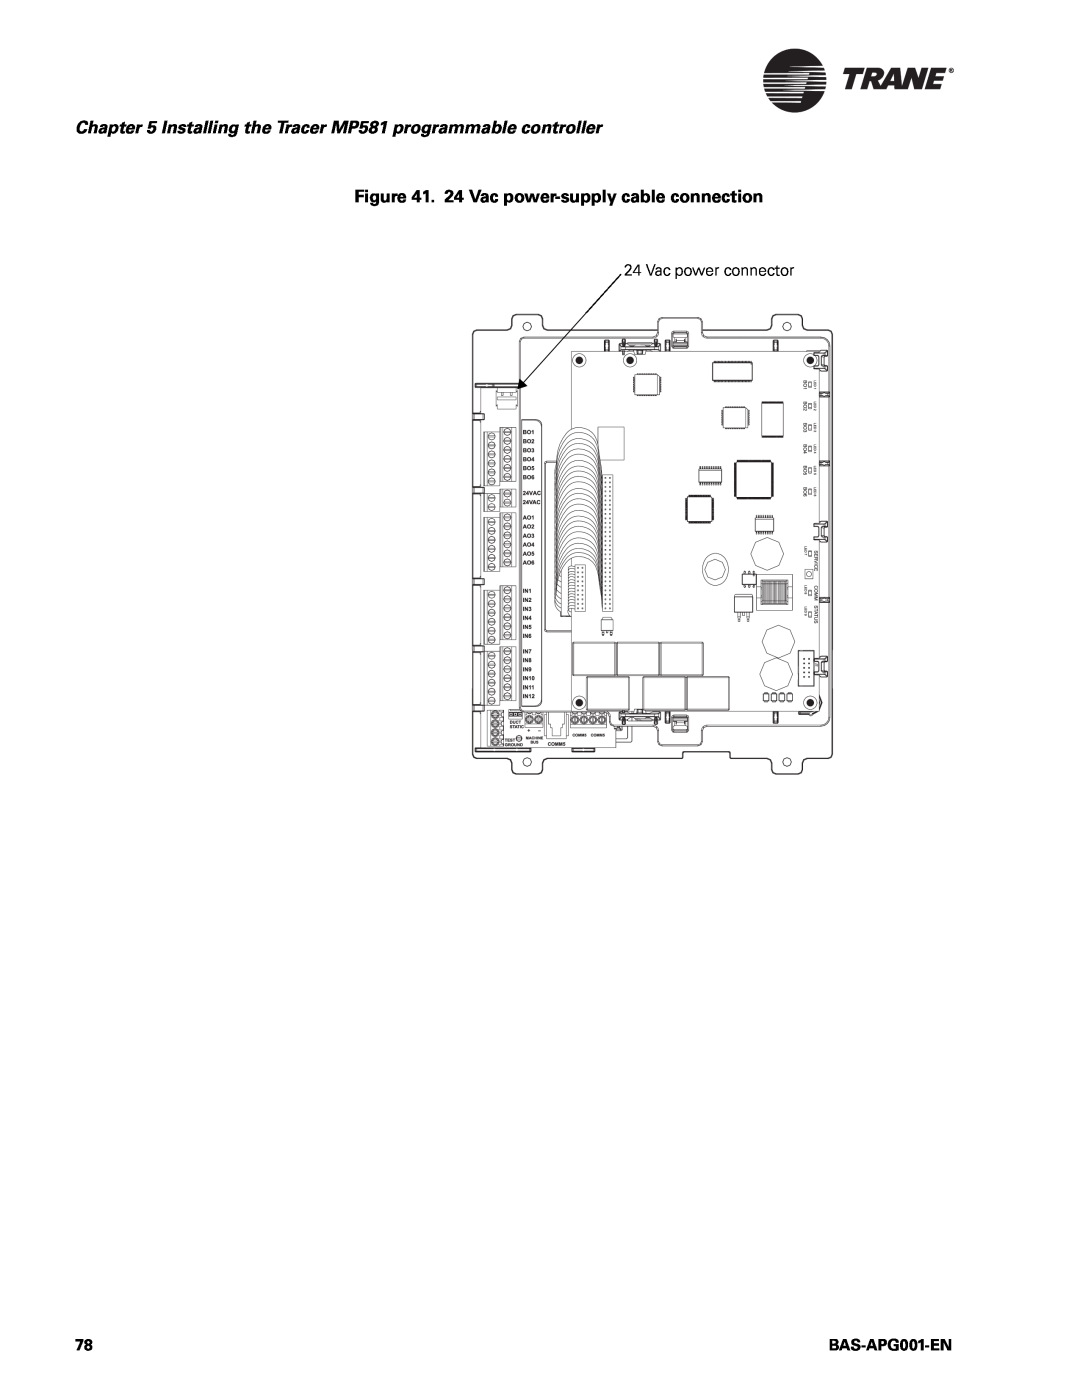 Trane BAS-APG001-EN manual 24 Vac power-supplycable connection, Vac power connector 